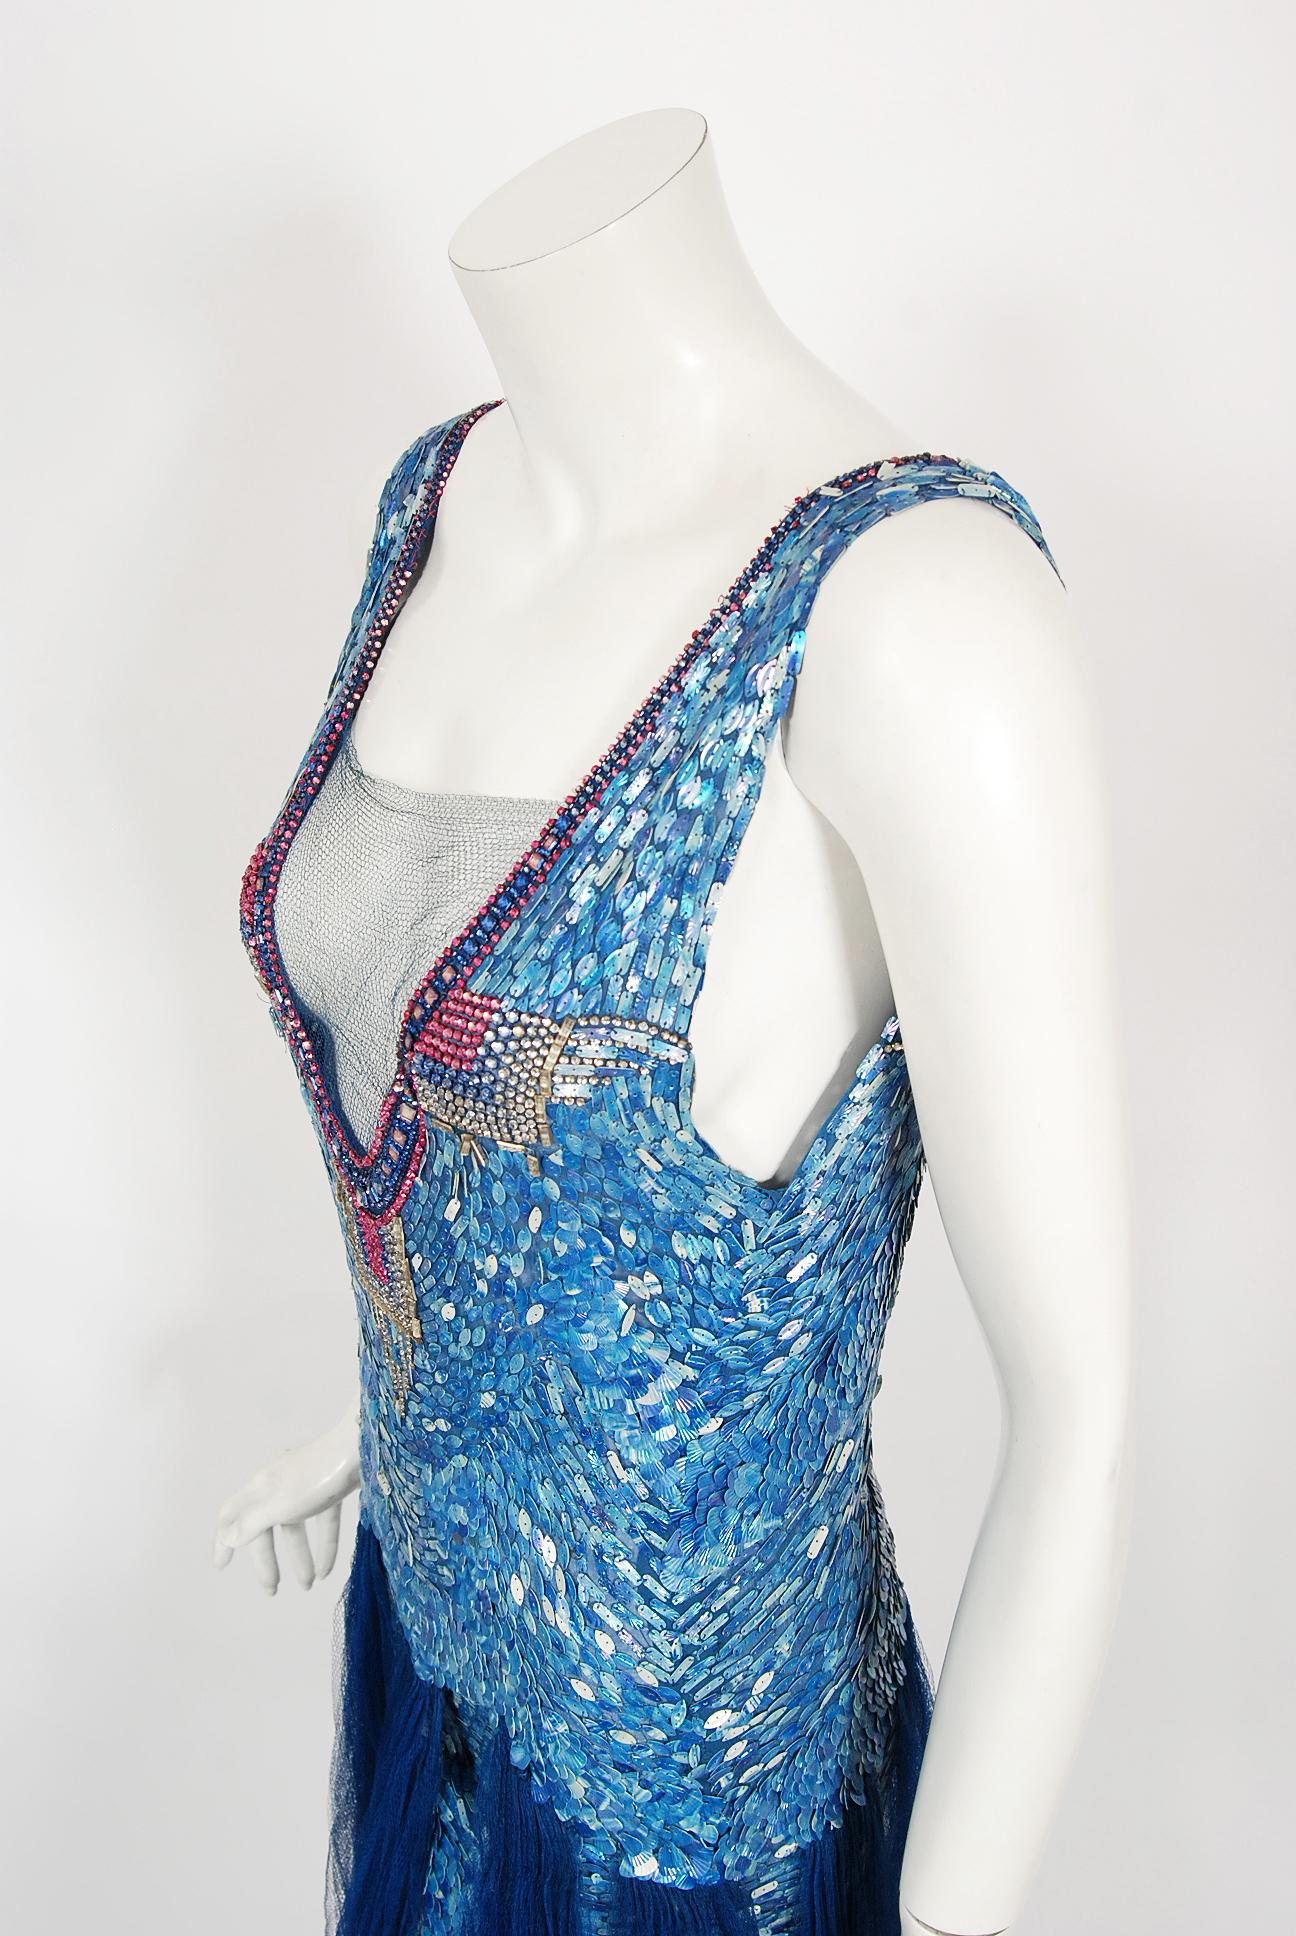 1920s blue dress